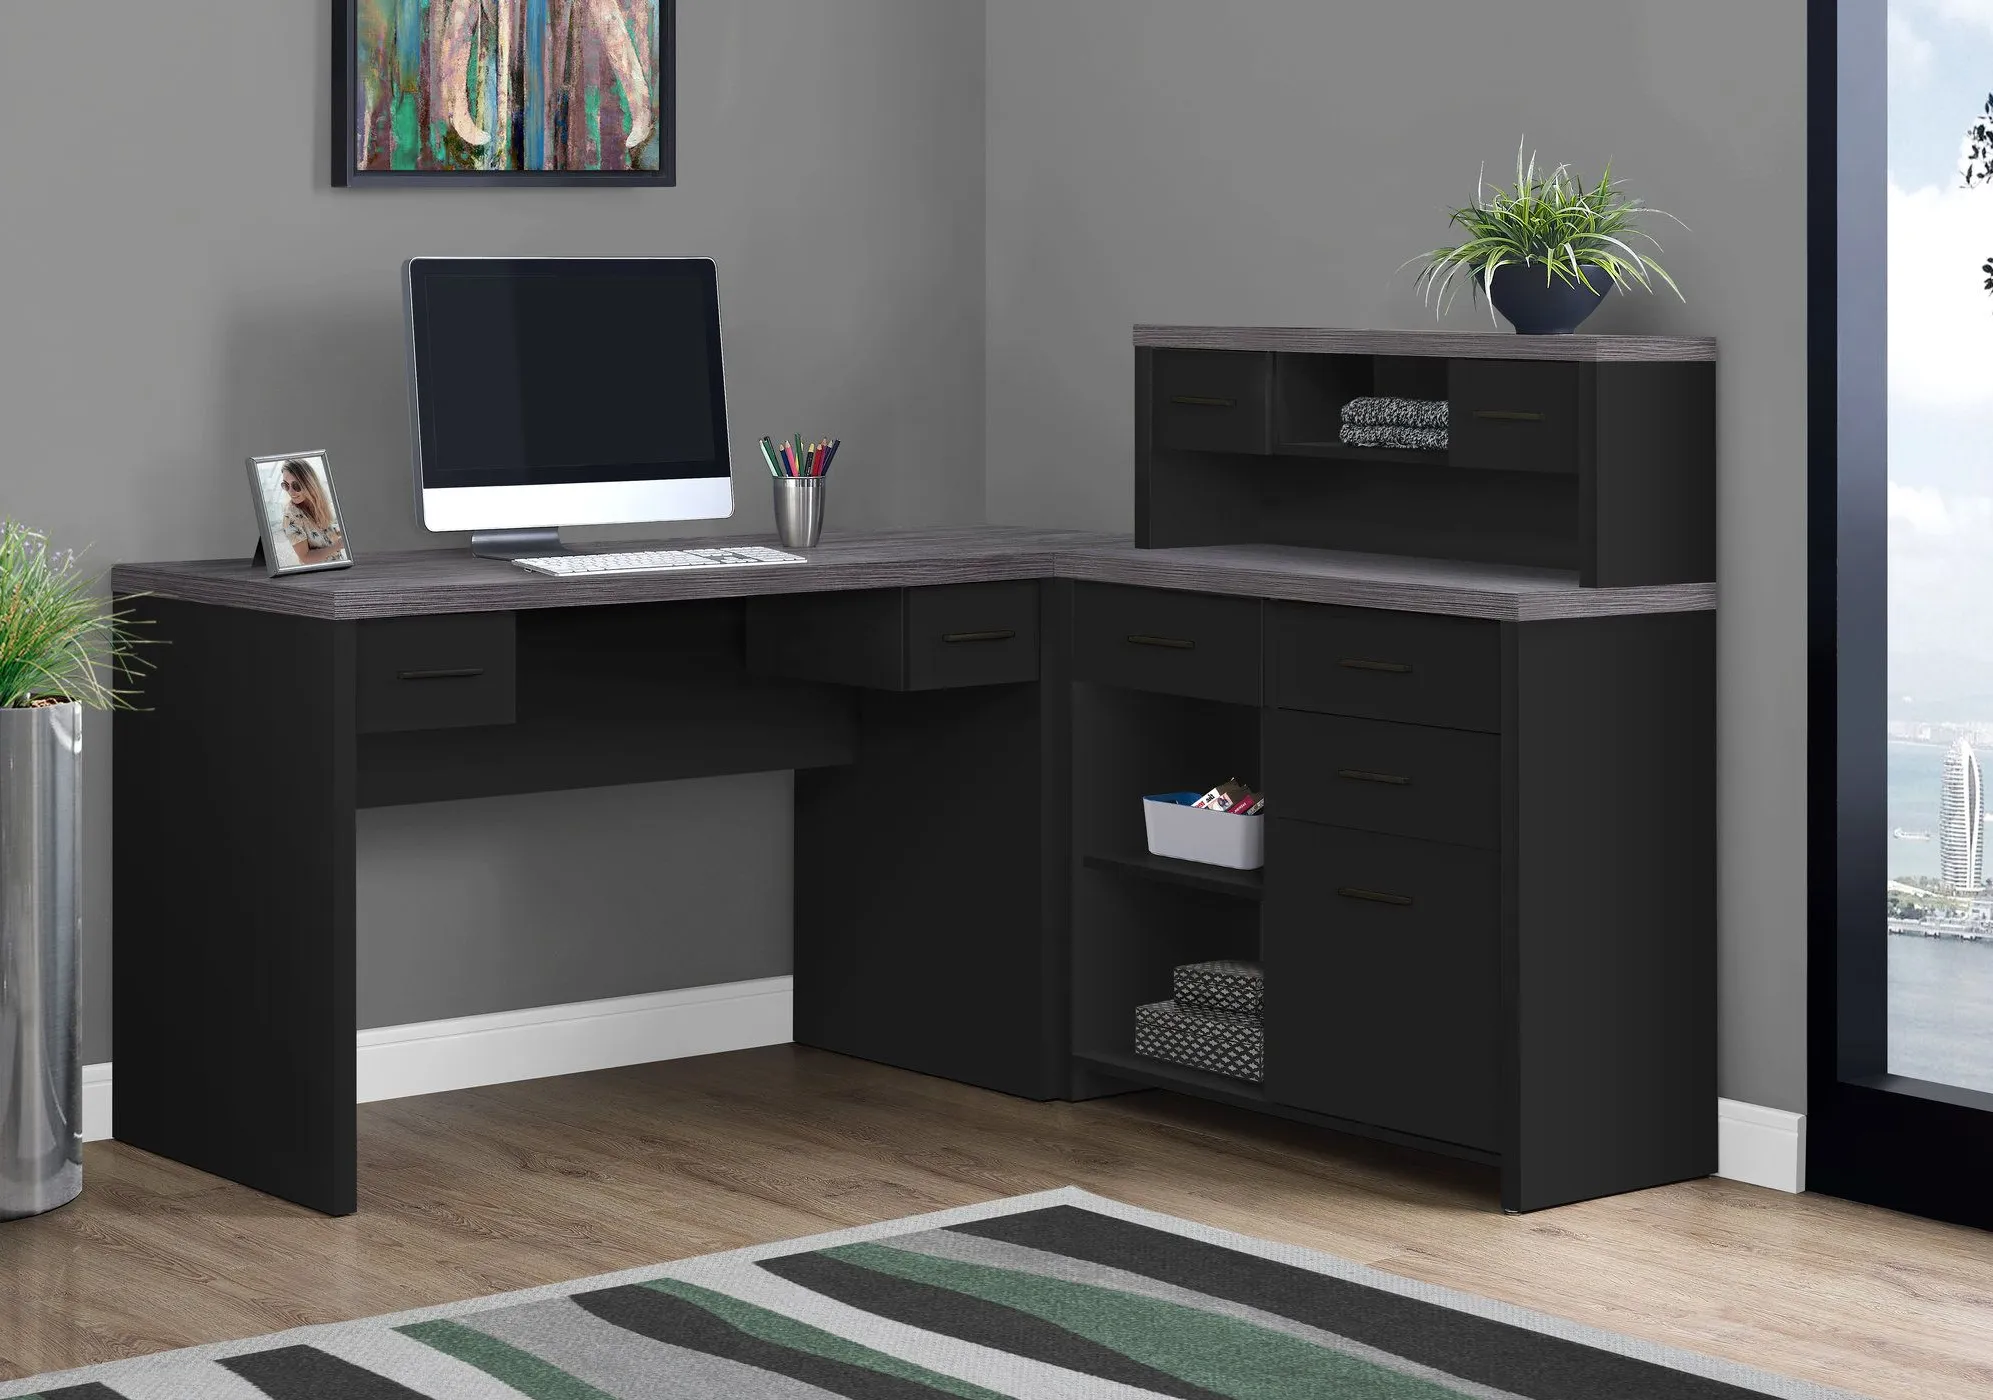 Computer Desk, Home Office, Corner, Left, Right Set-Up, Storage Drawers, L Shape, Work, Laptop, Laminate, Black, Grey, Contemporary, Modern